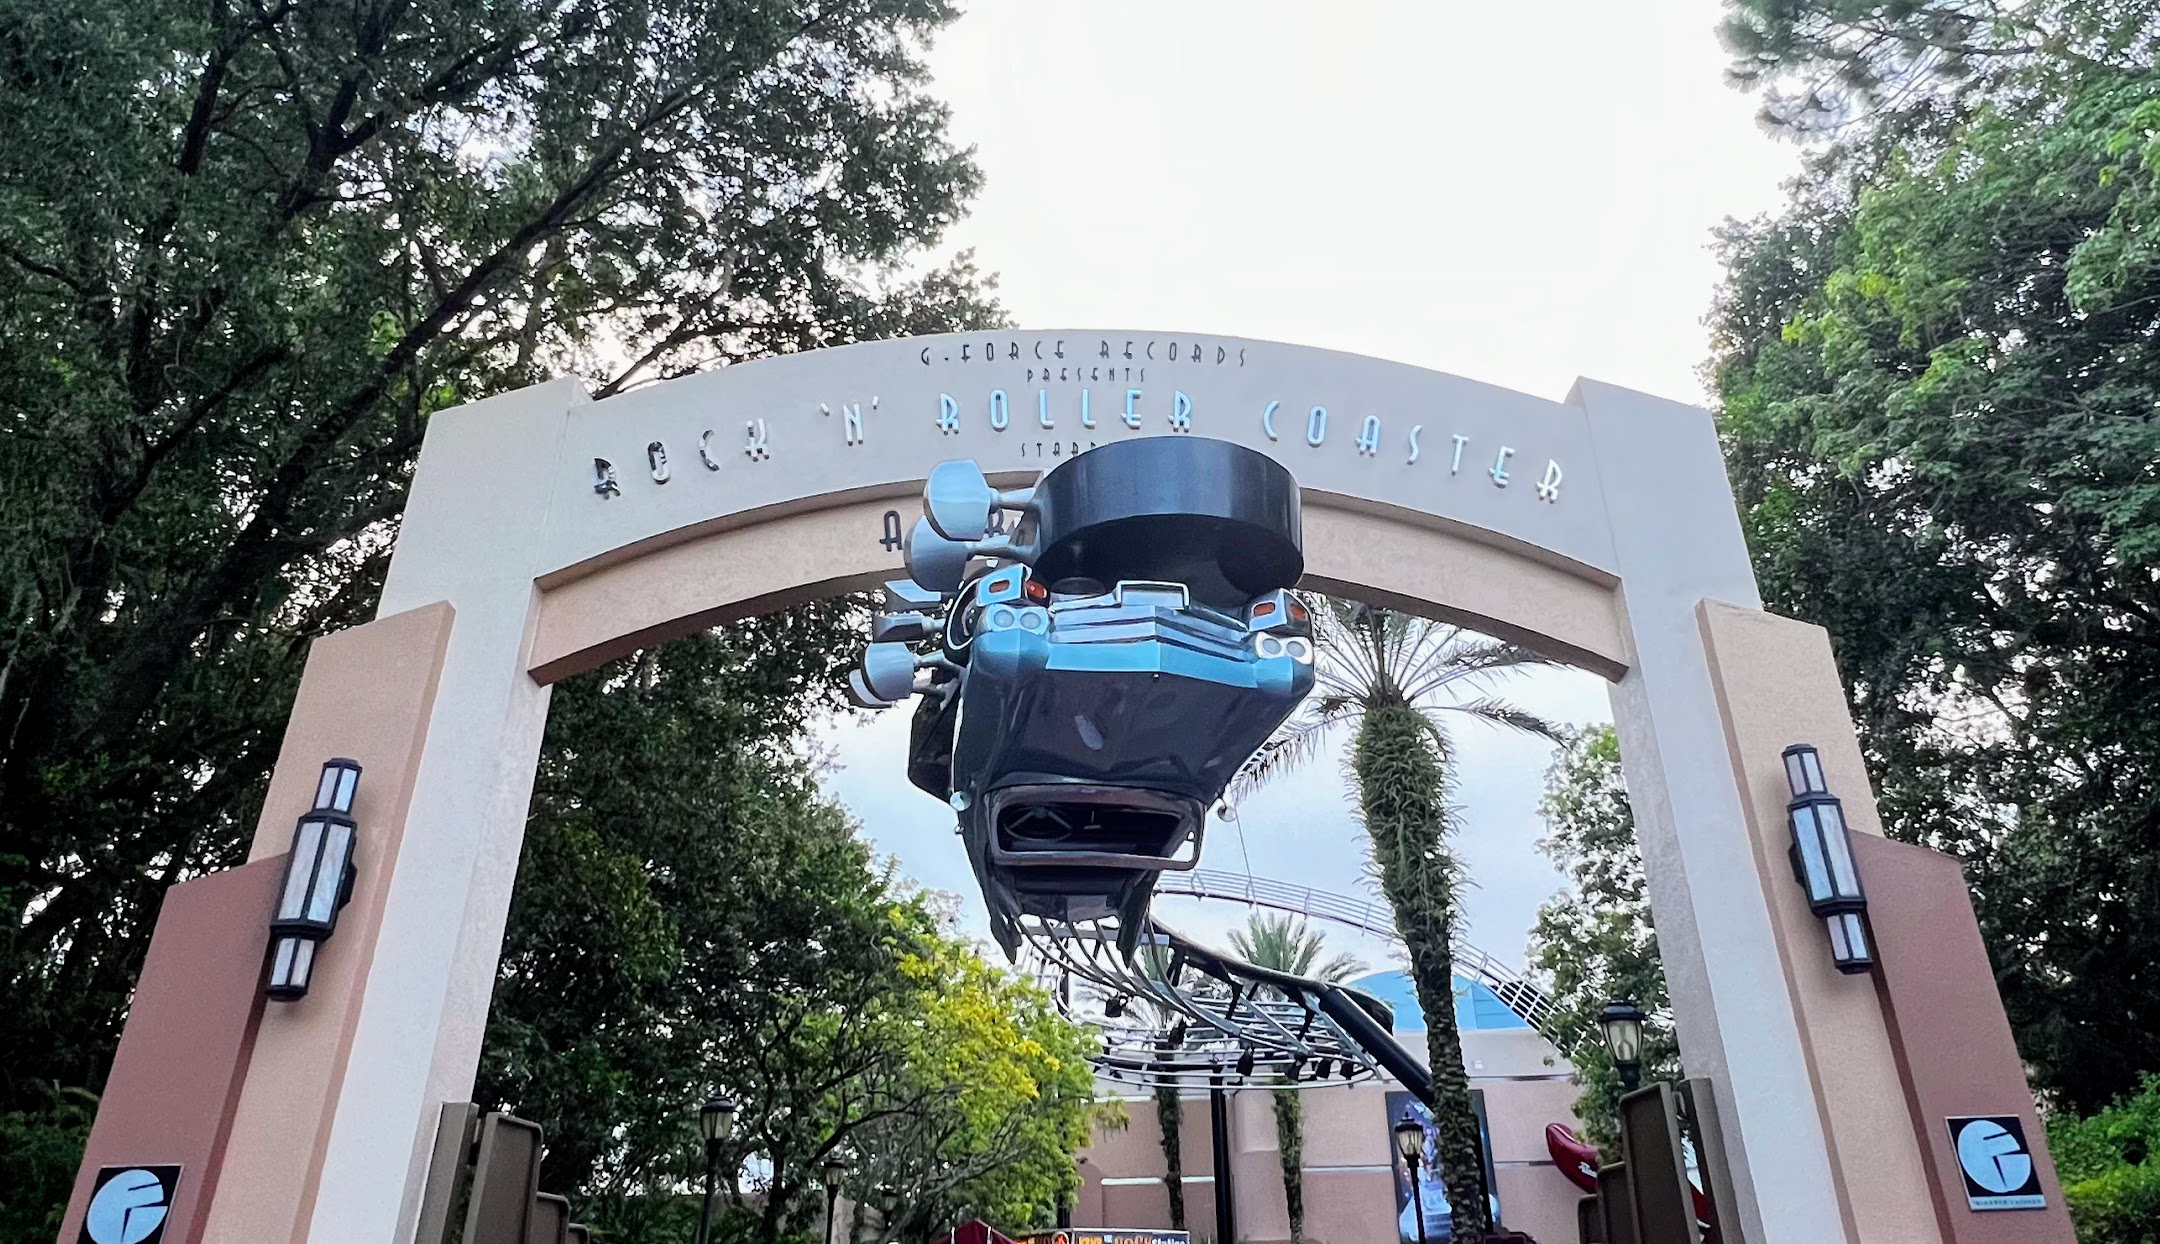 Rock 'n' Roller Coaster® Starring Aerosmith, Hollywood Studios Attractions